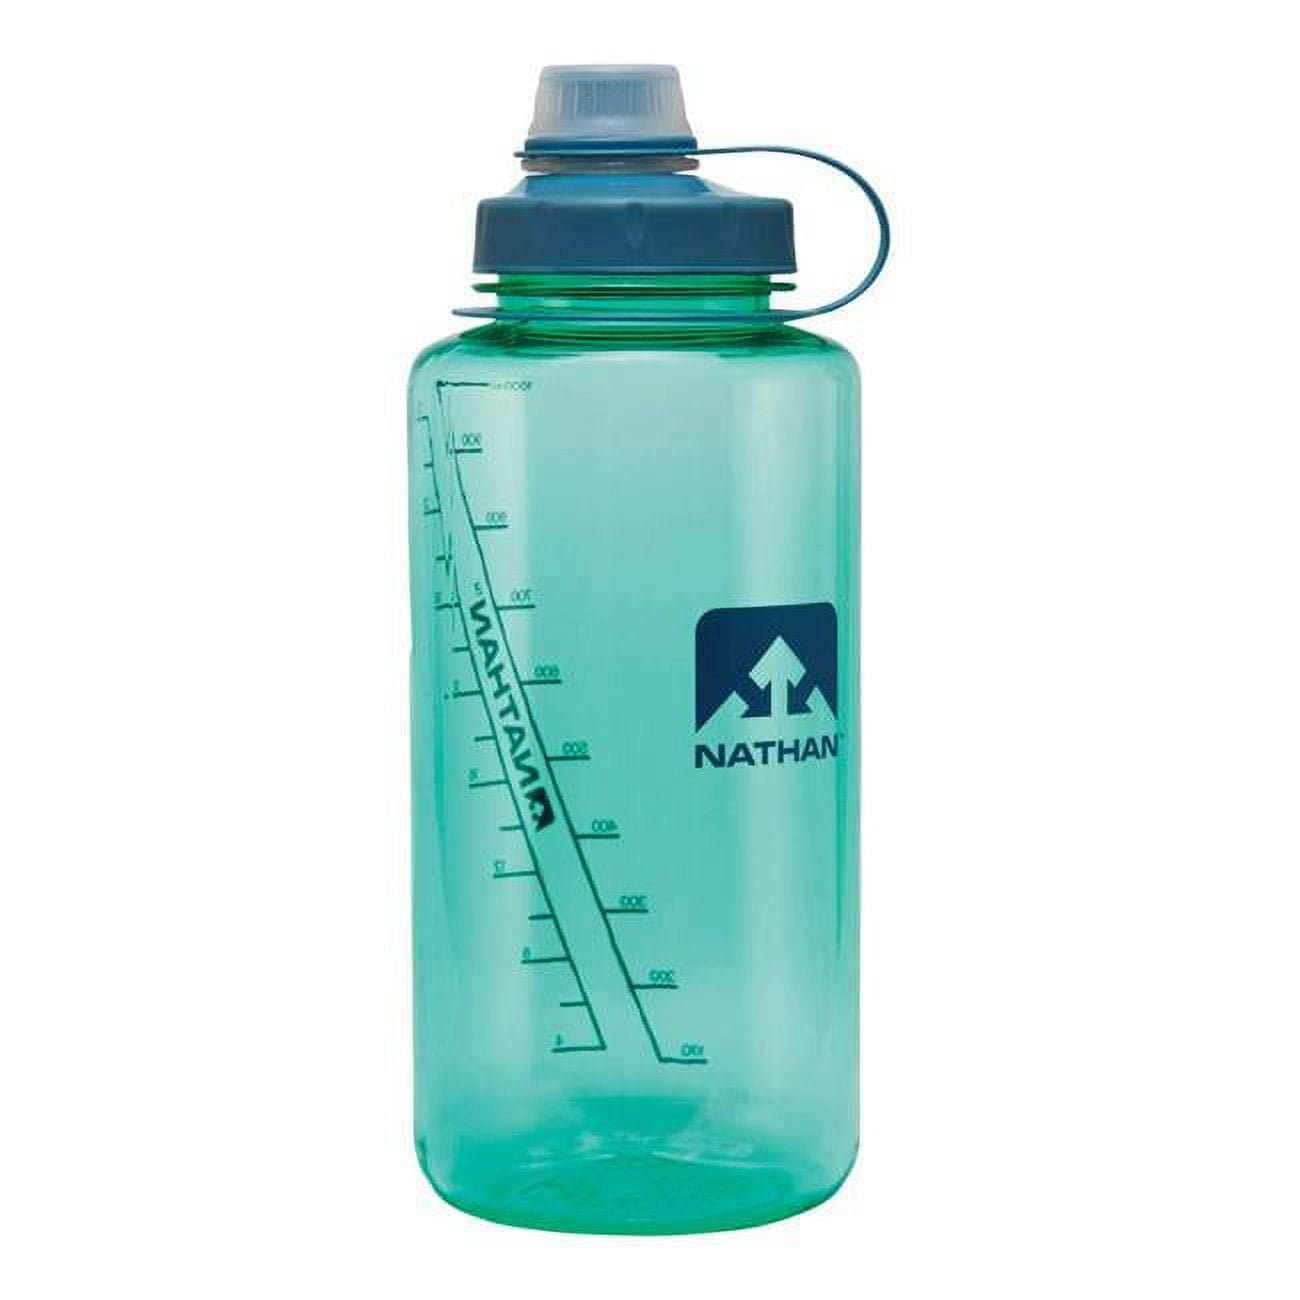 Full Cheeks™ Small Pet No-Chew Glass Water Bottle